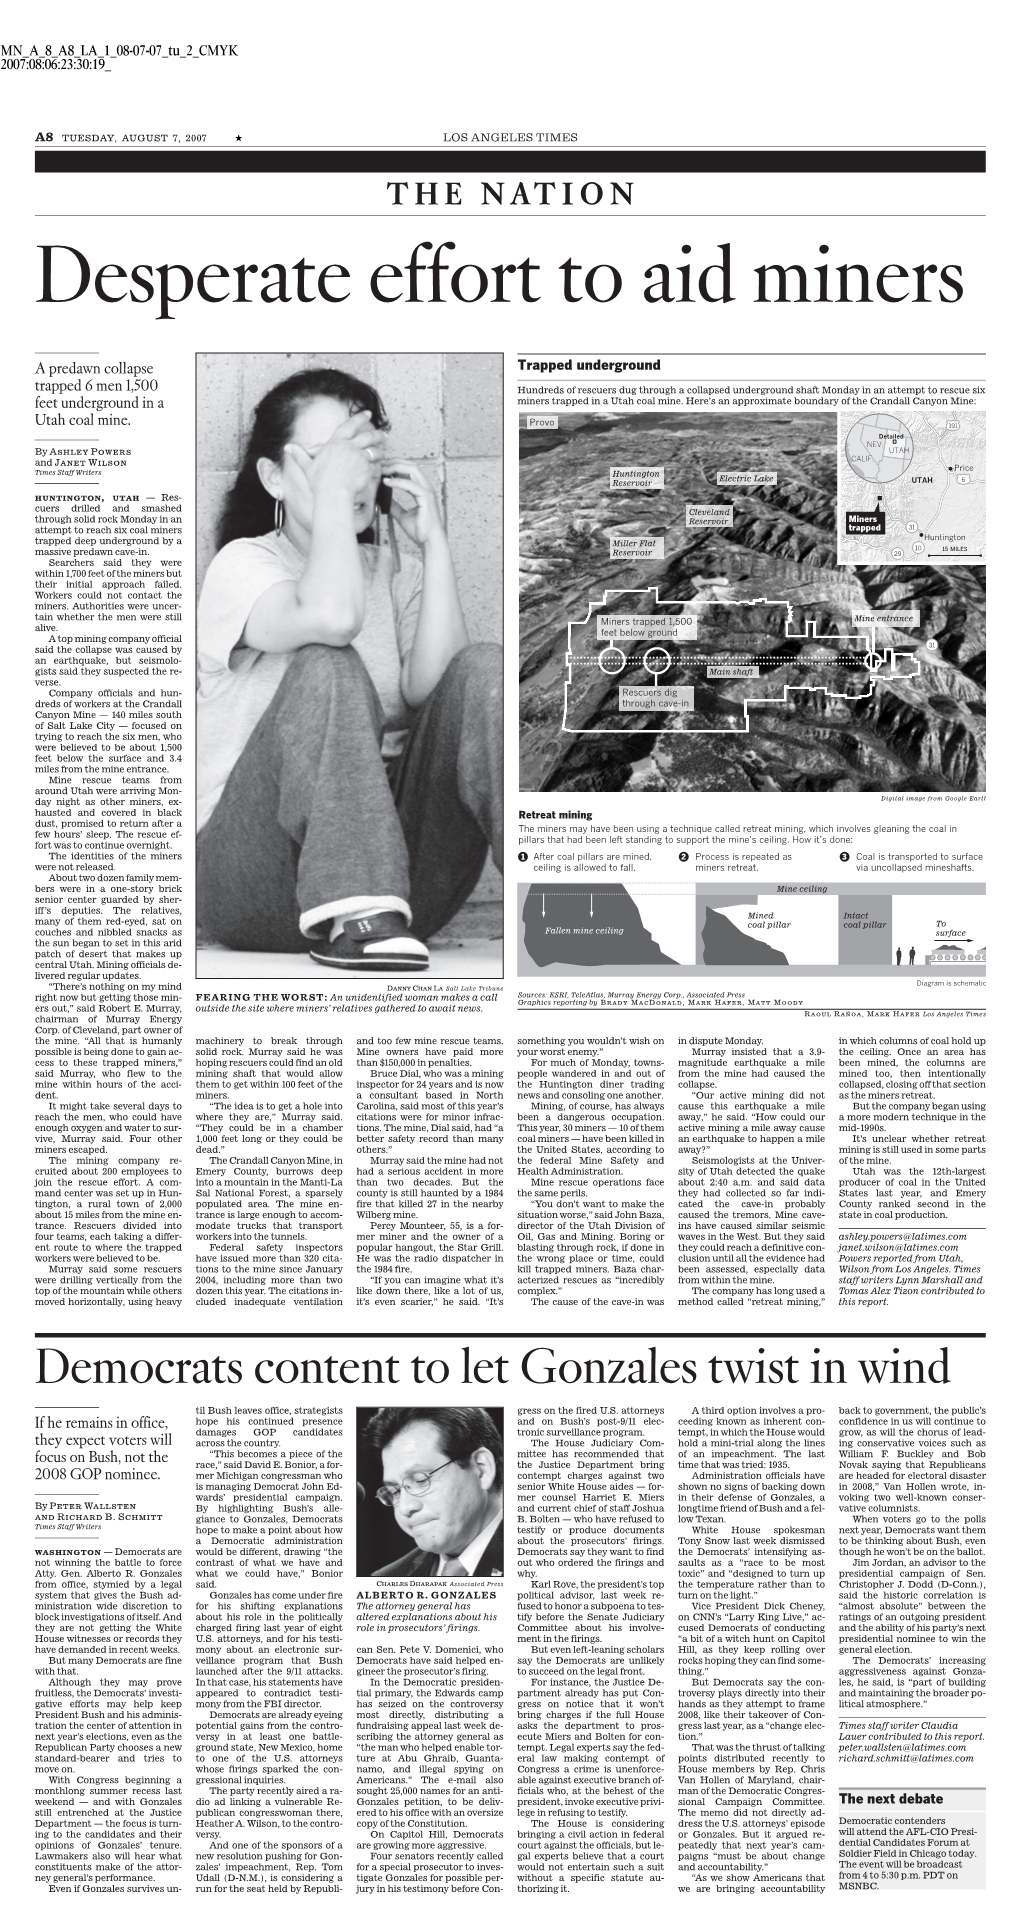 Democrats Content to Let Gonzales Twist in Wind